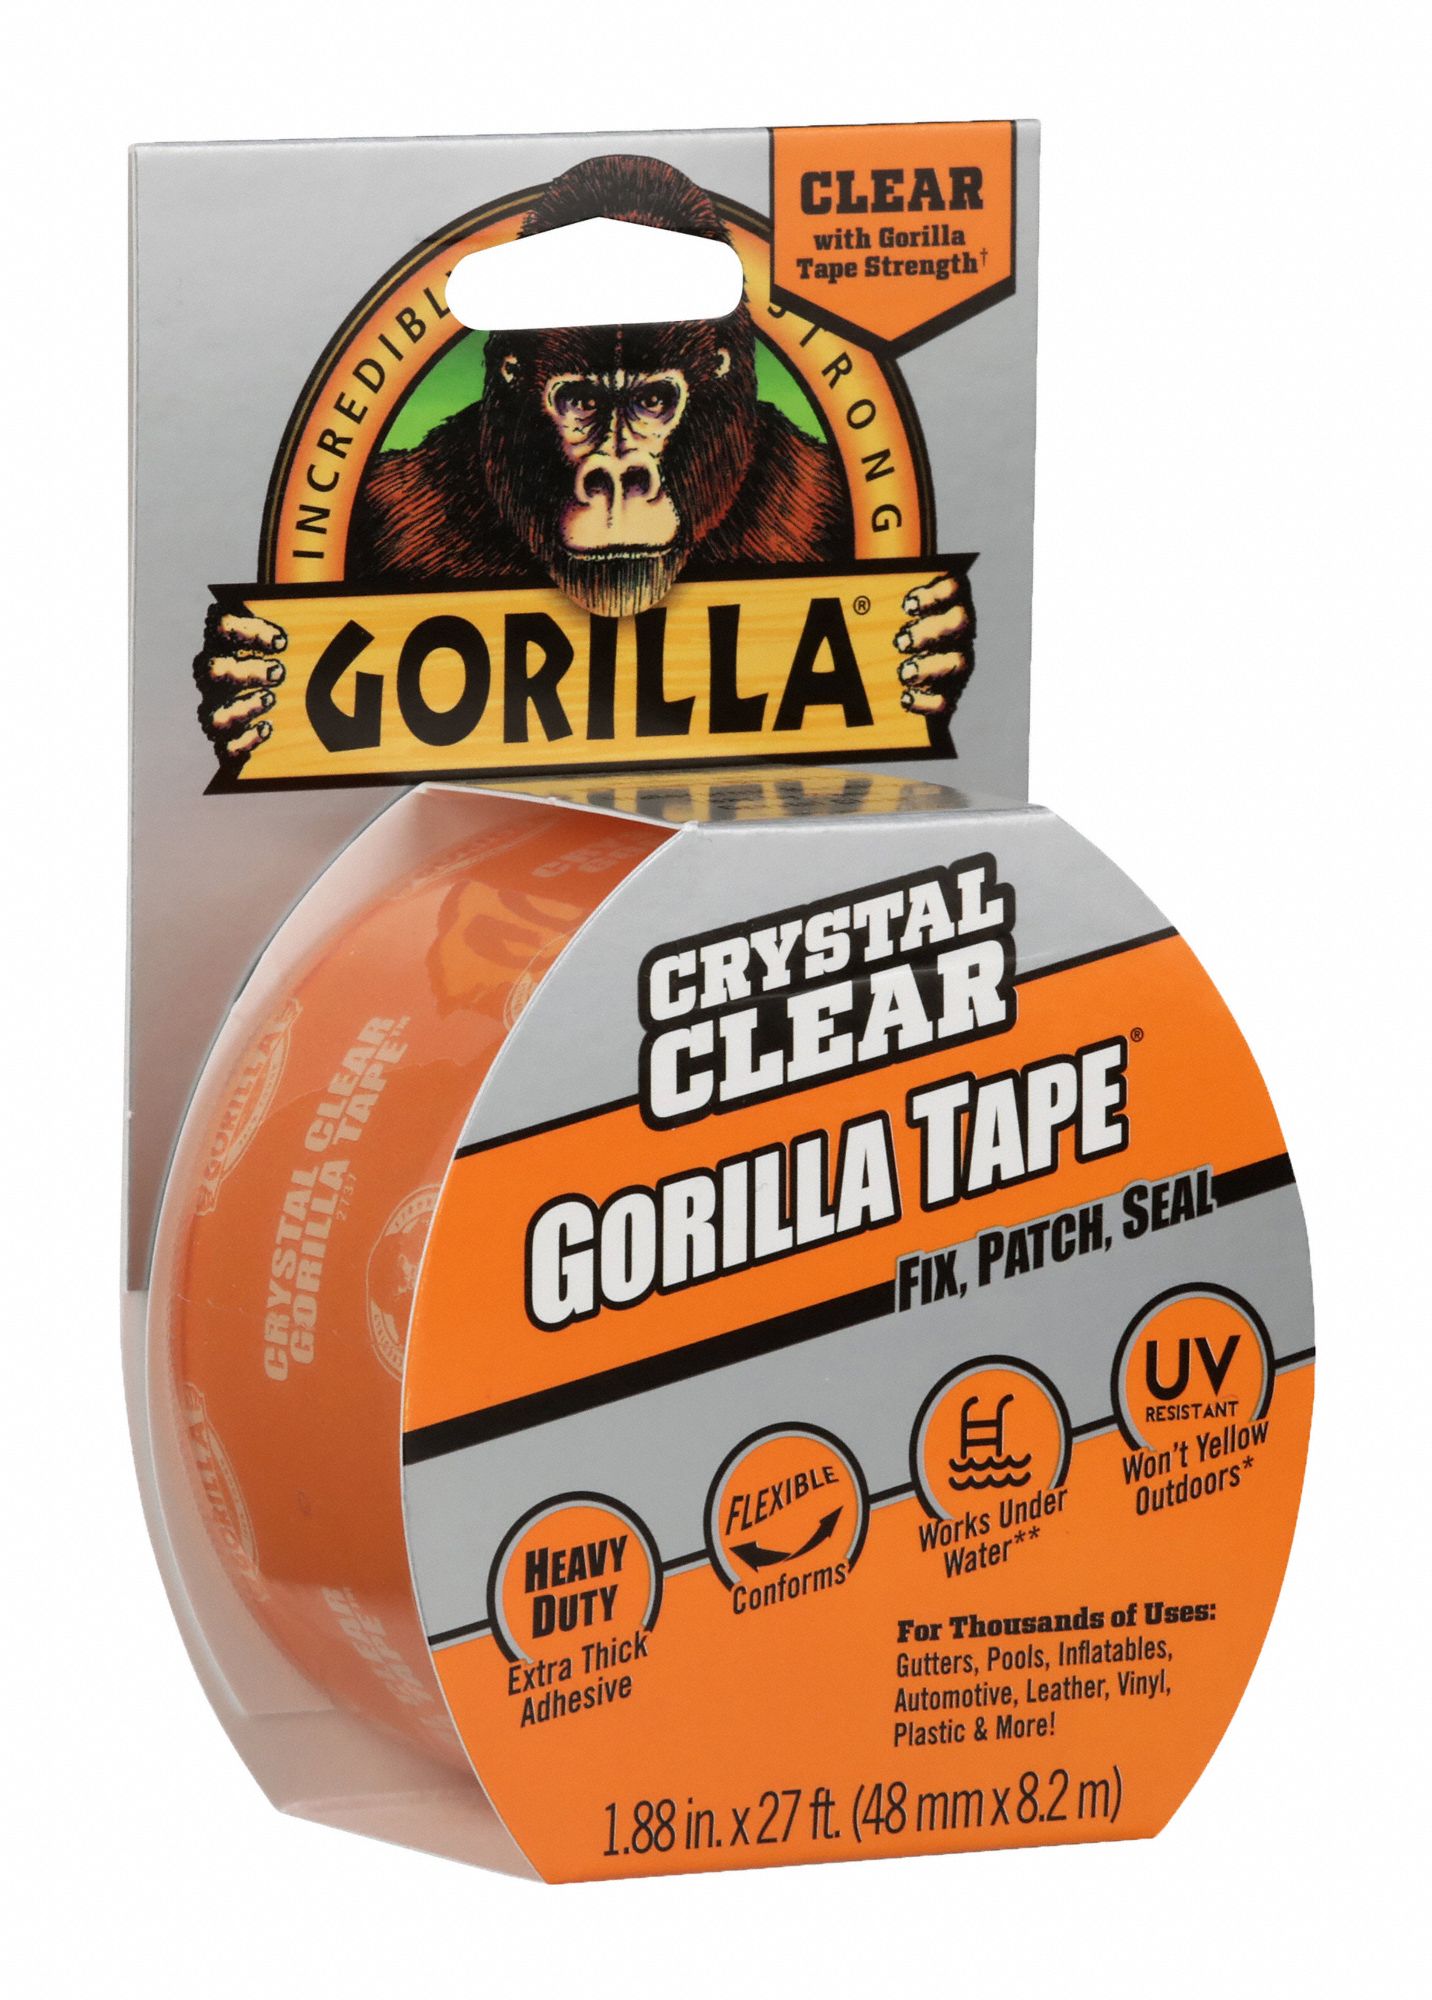 Gorilla Crystal Clear Tape - Zerbee